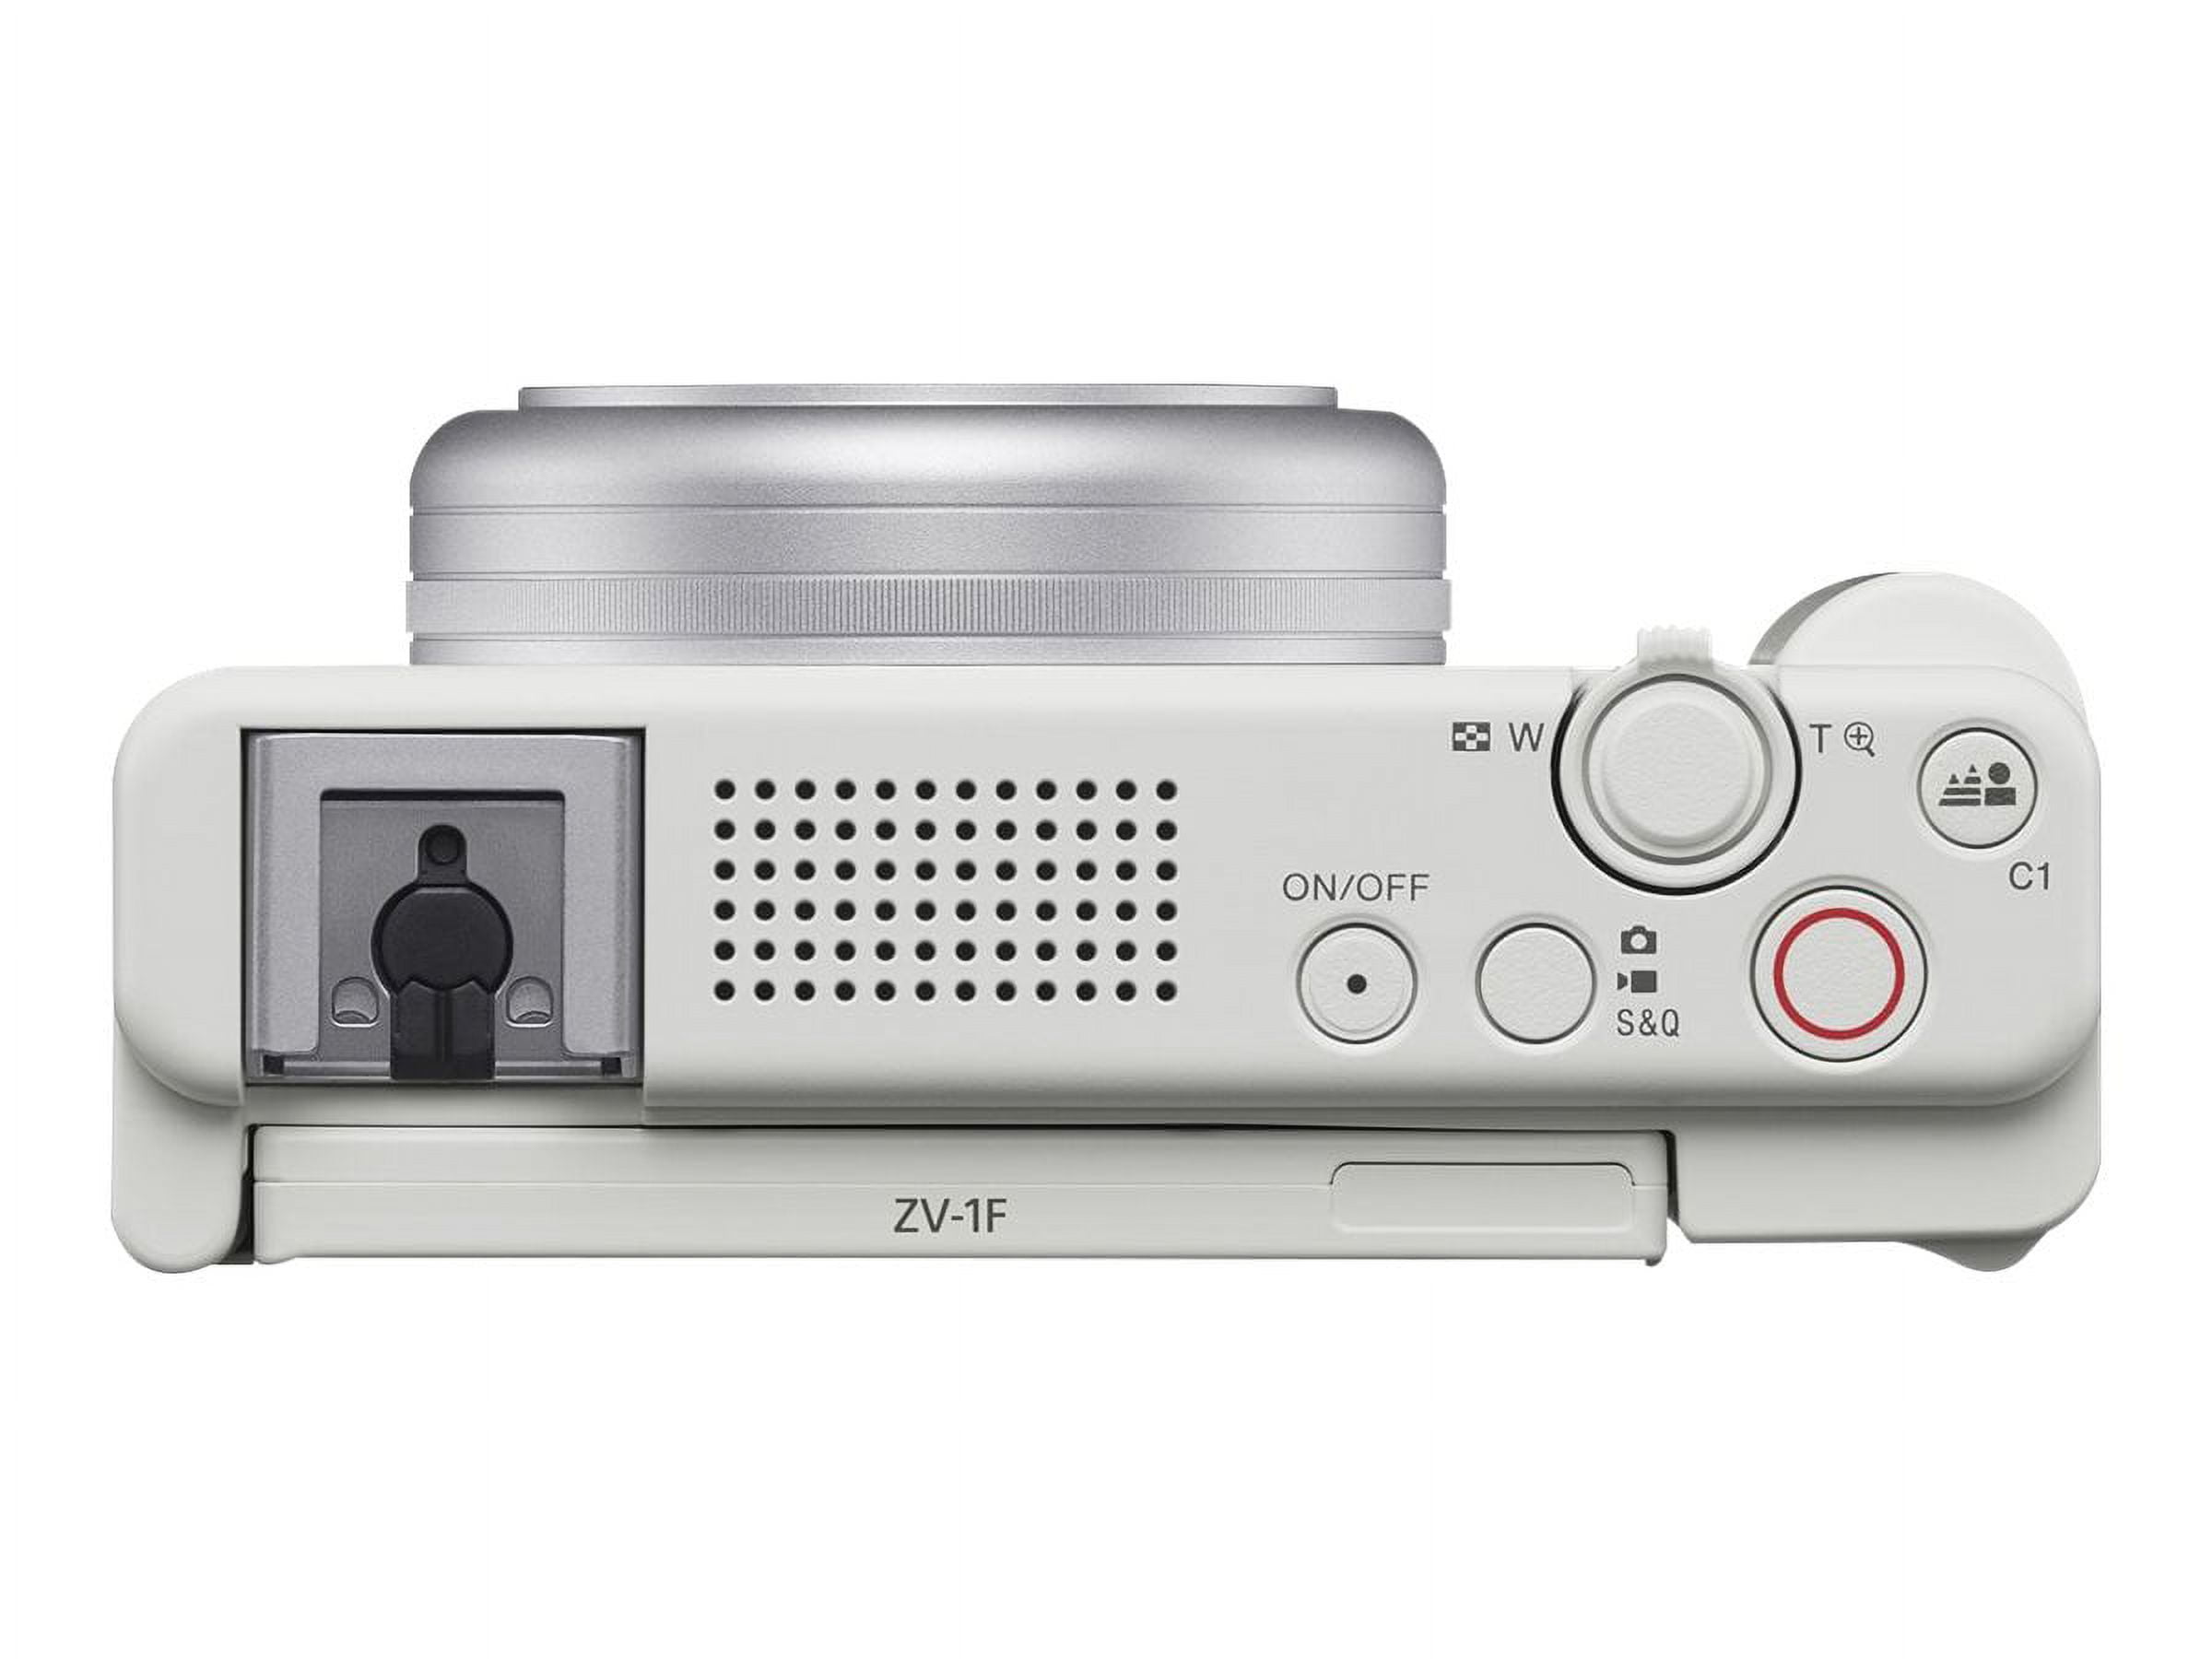 ZV-1F, Compact Cameras